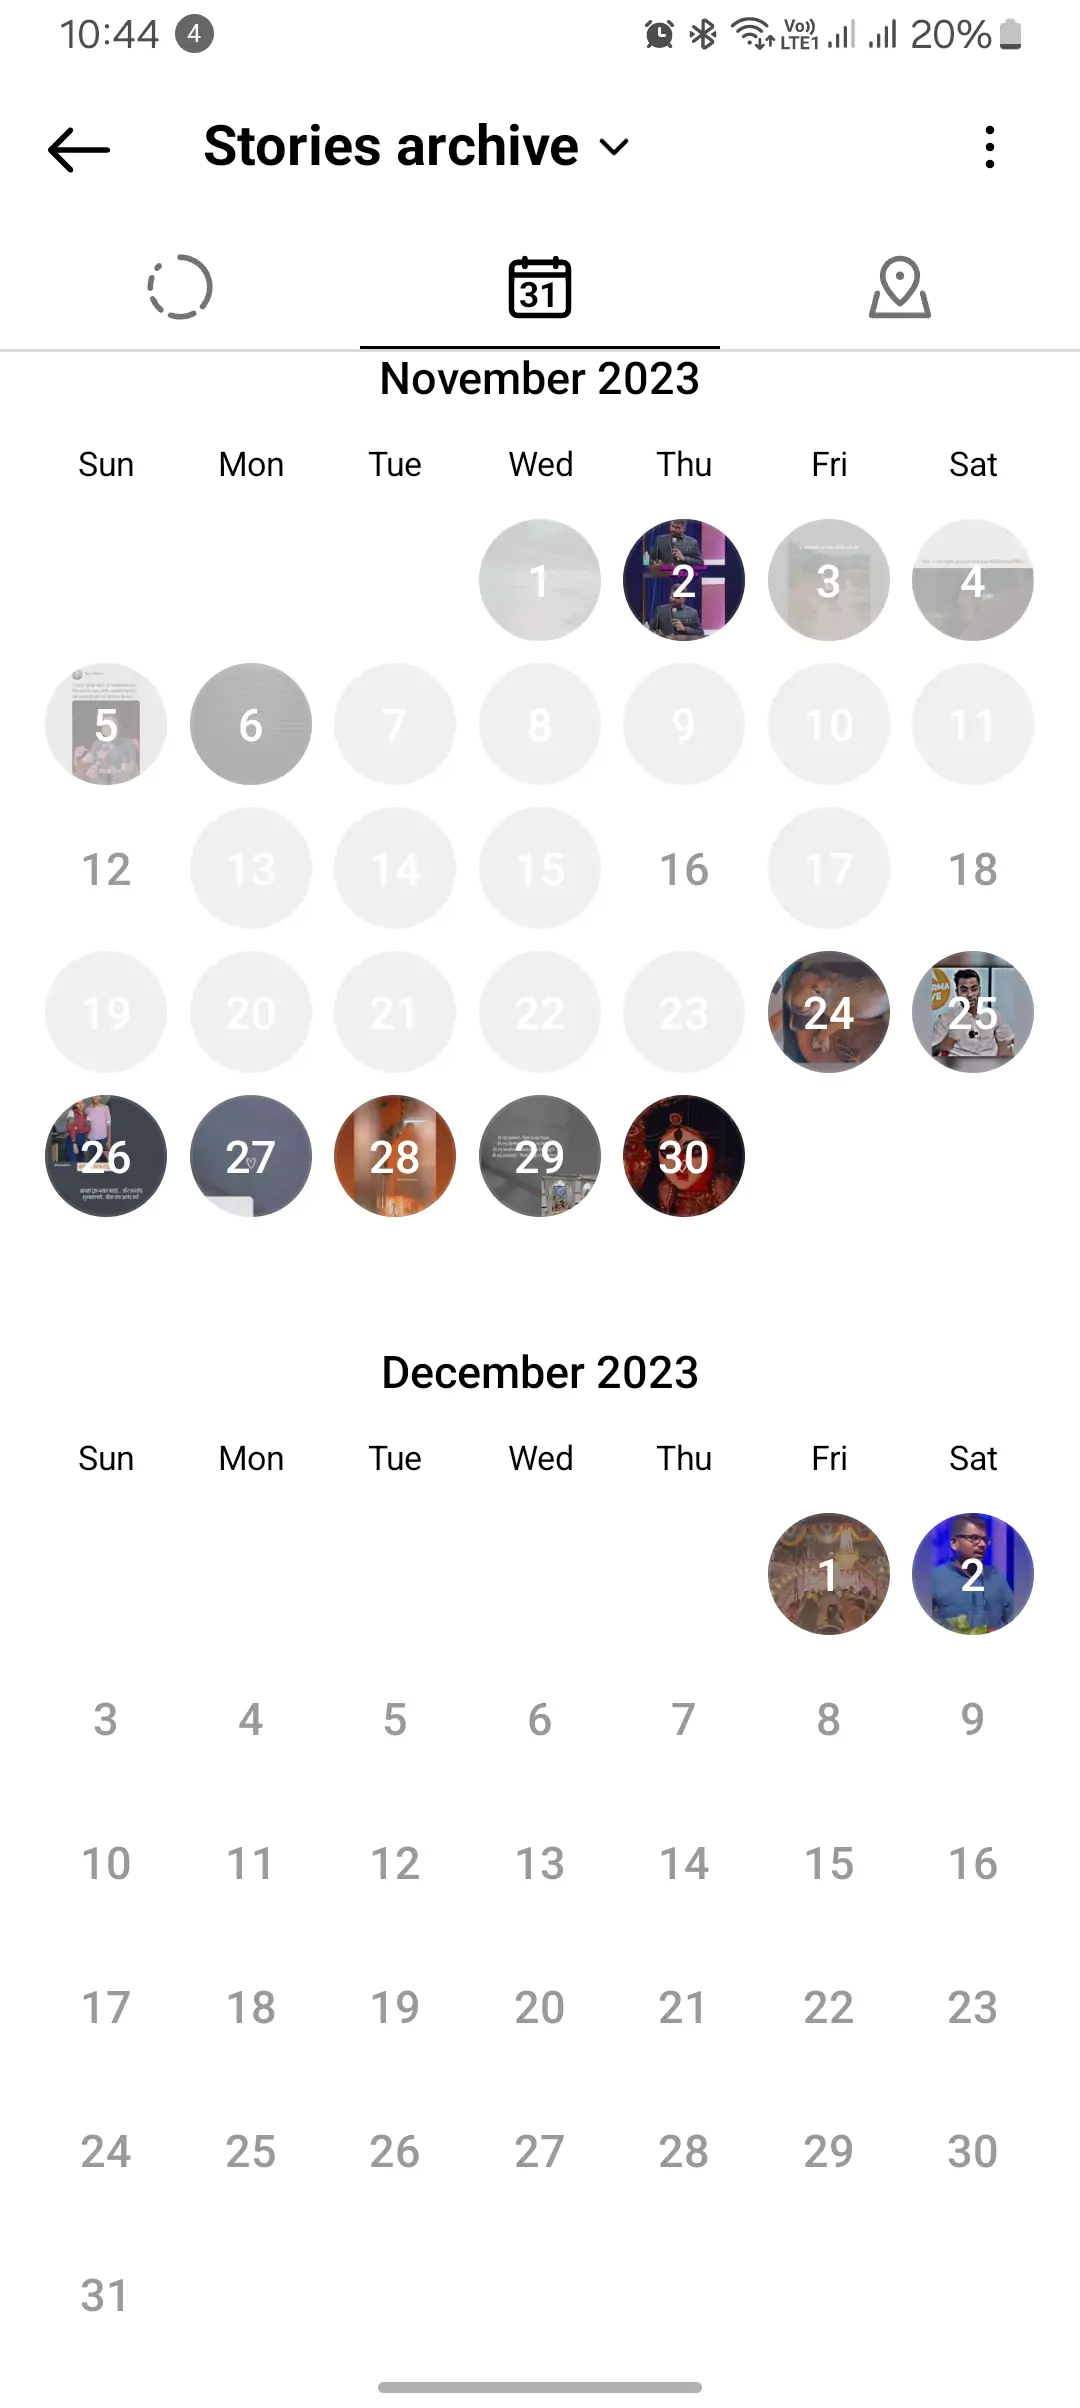 screenshot of calendar in stories archive